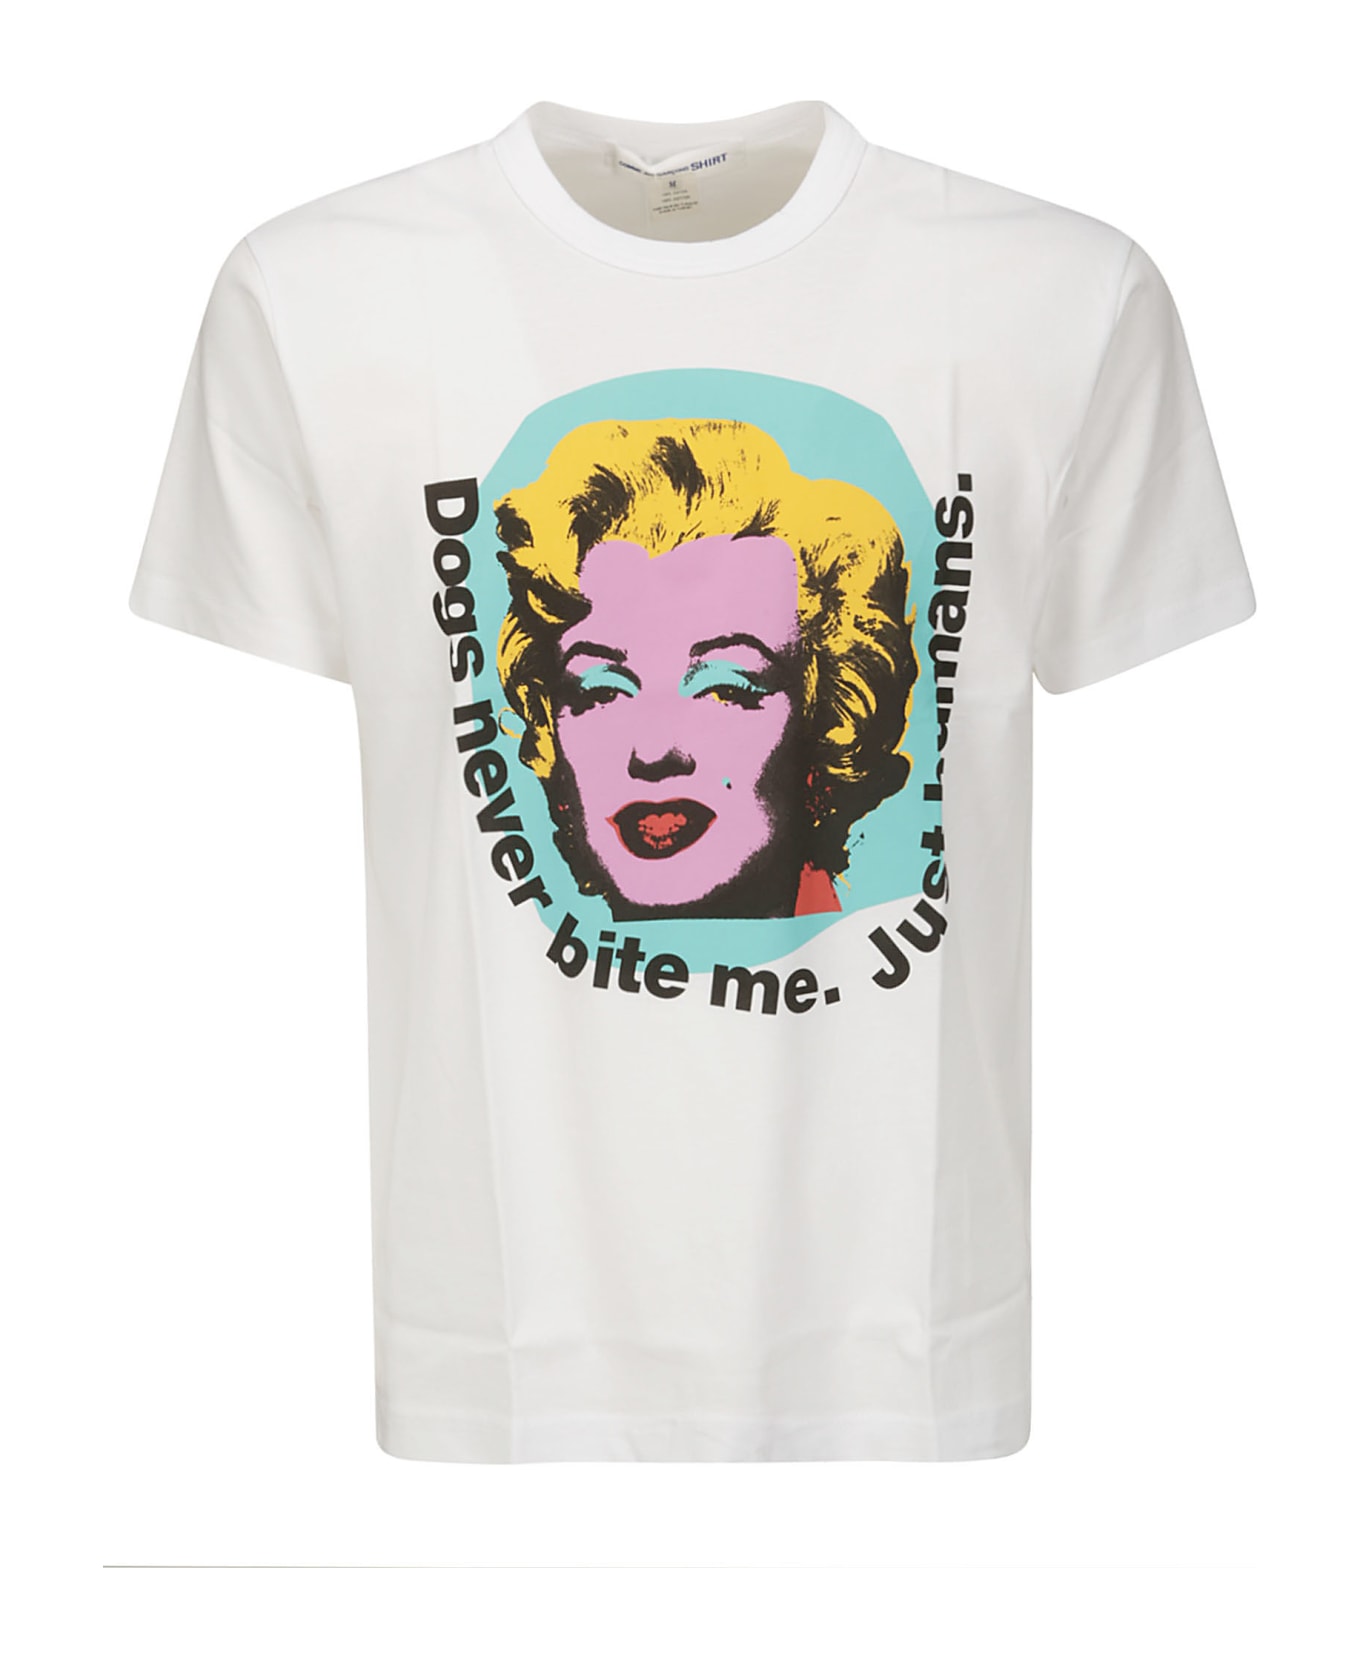 Comme des Garçons Shirt Cotton Jersey Plain With Print I Andy Warhol - WHITE